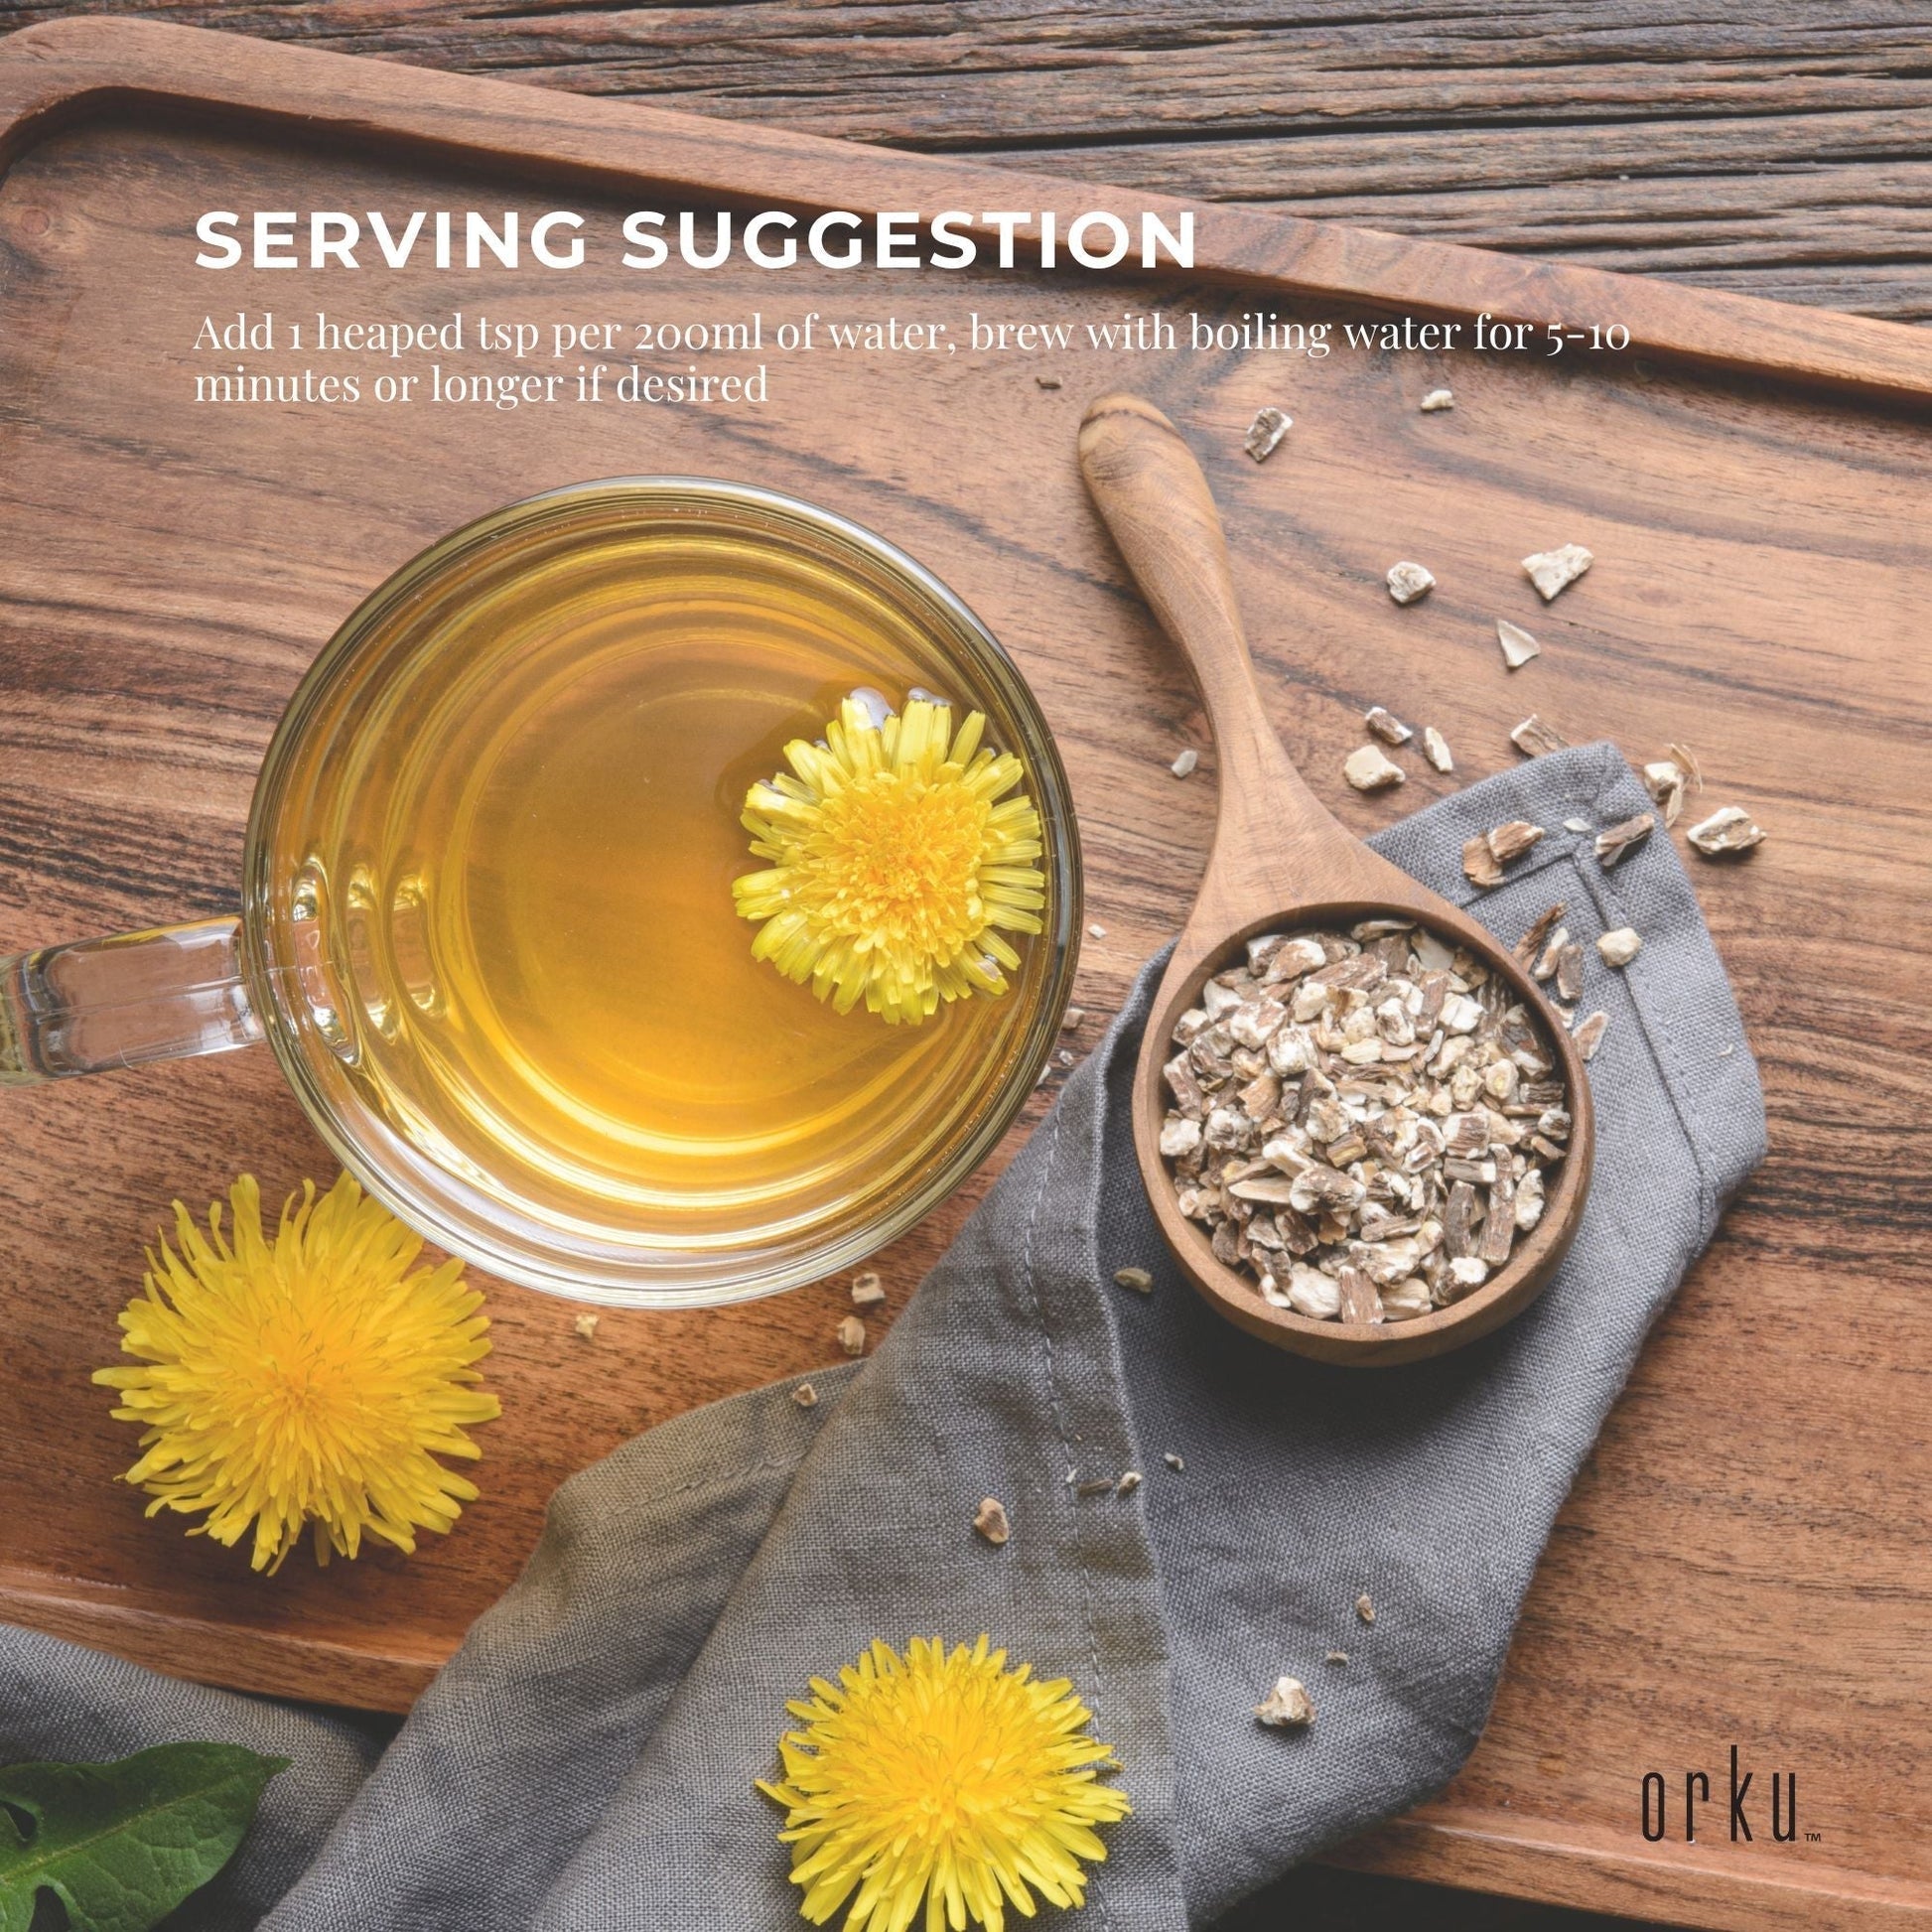 100g Organic Dandelion Root - Dried Raw Herbal Tea Supplement